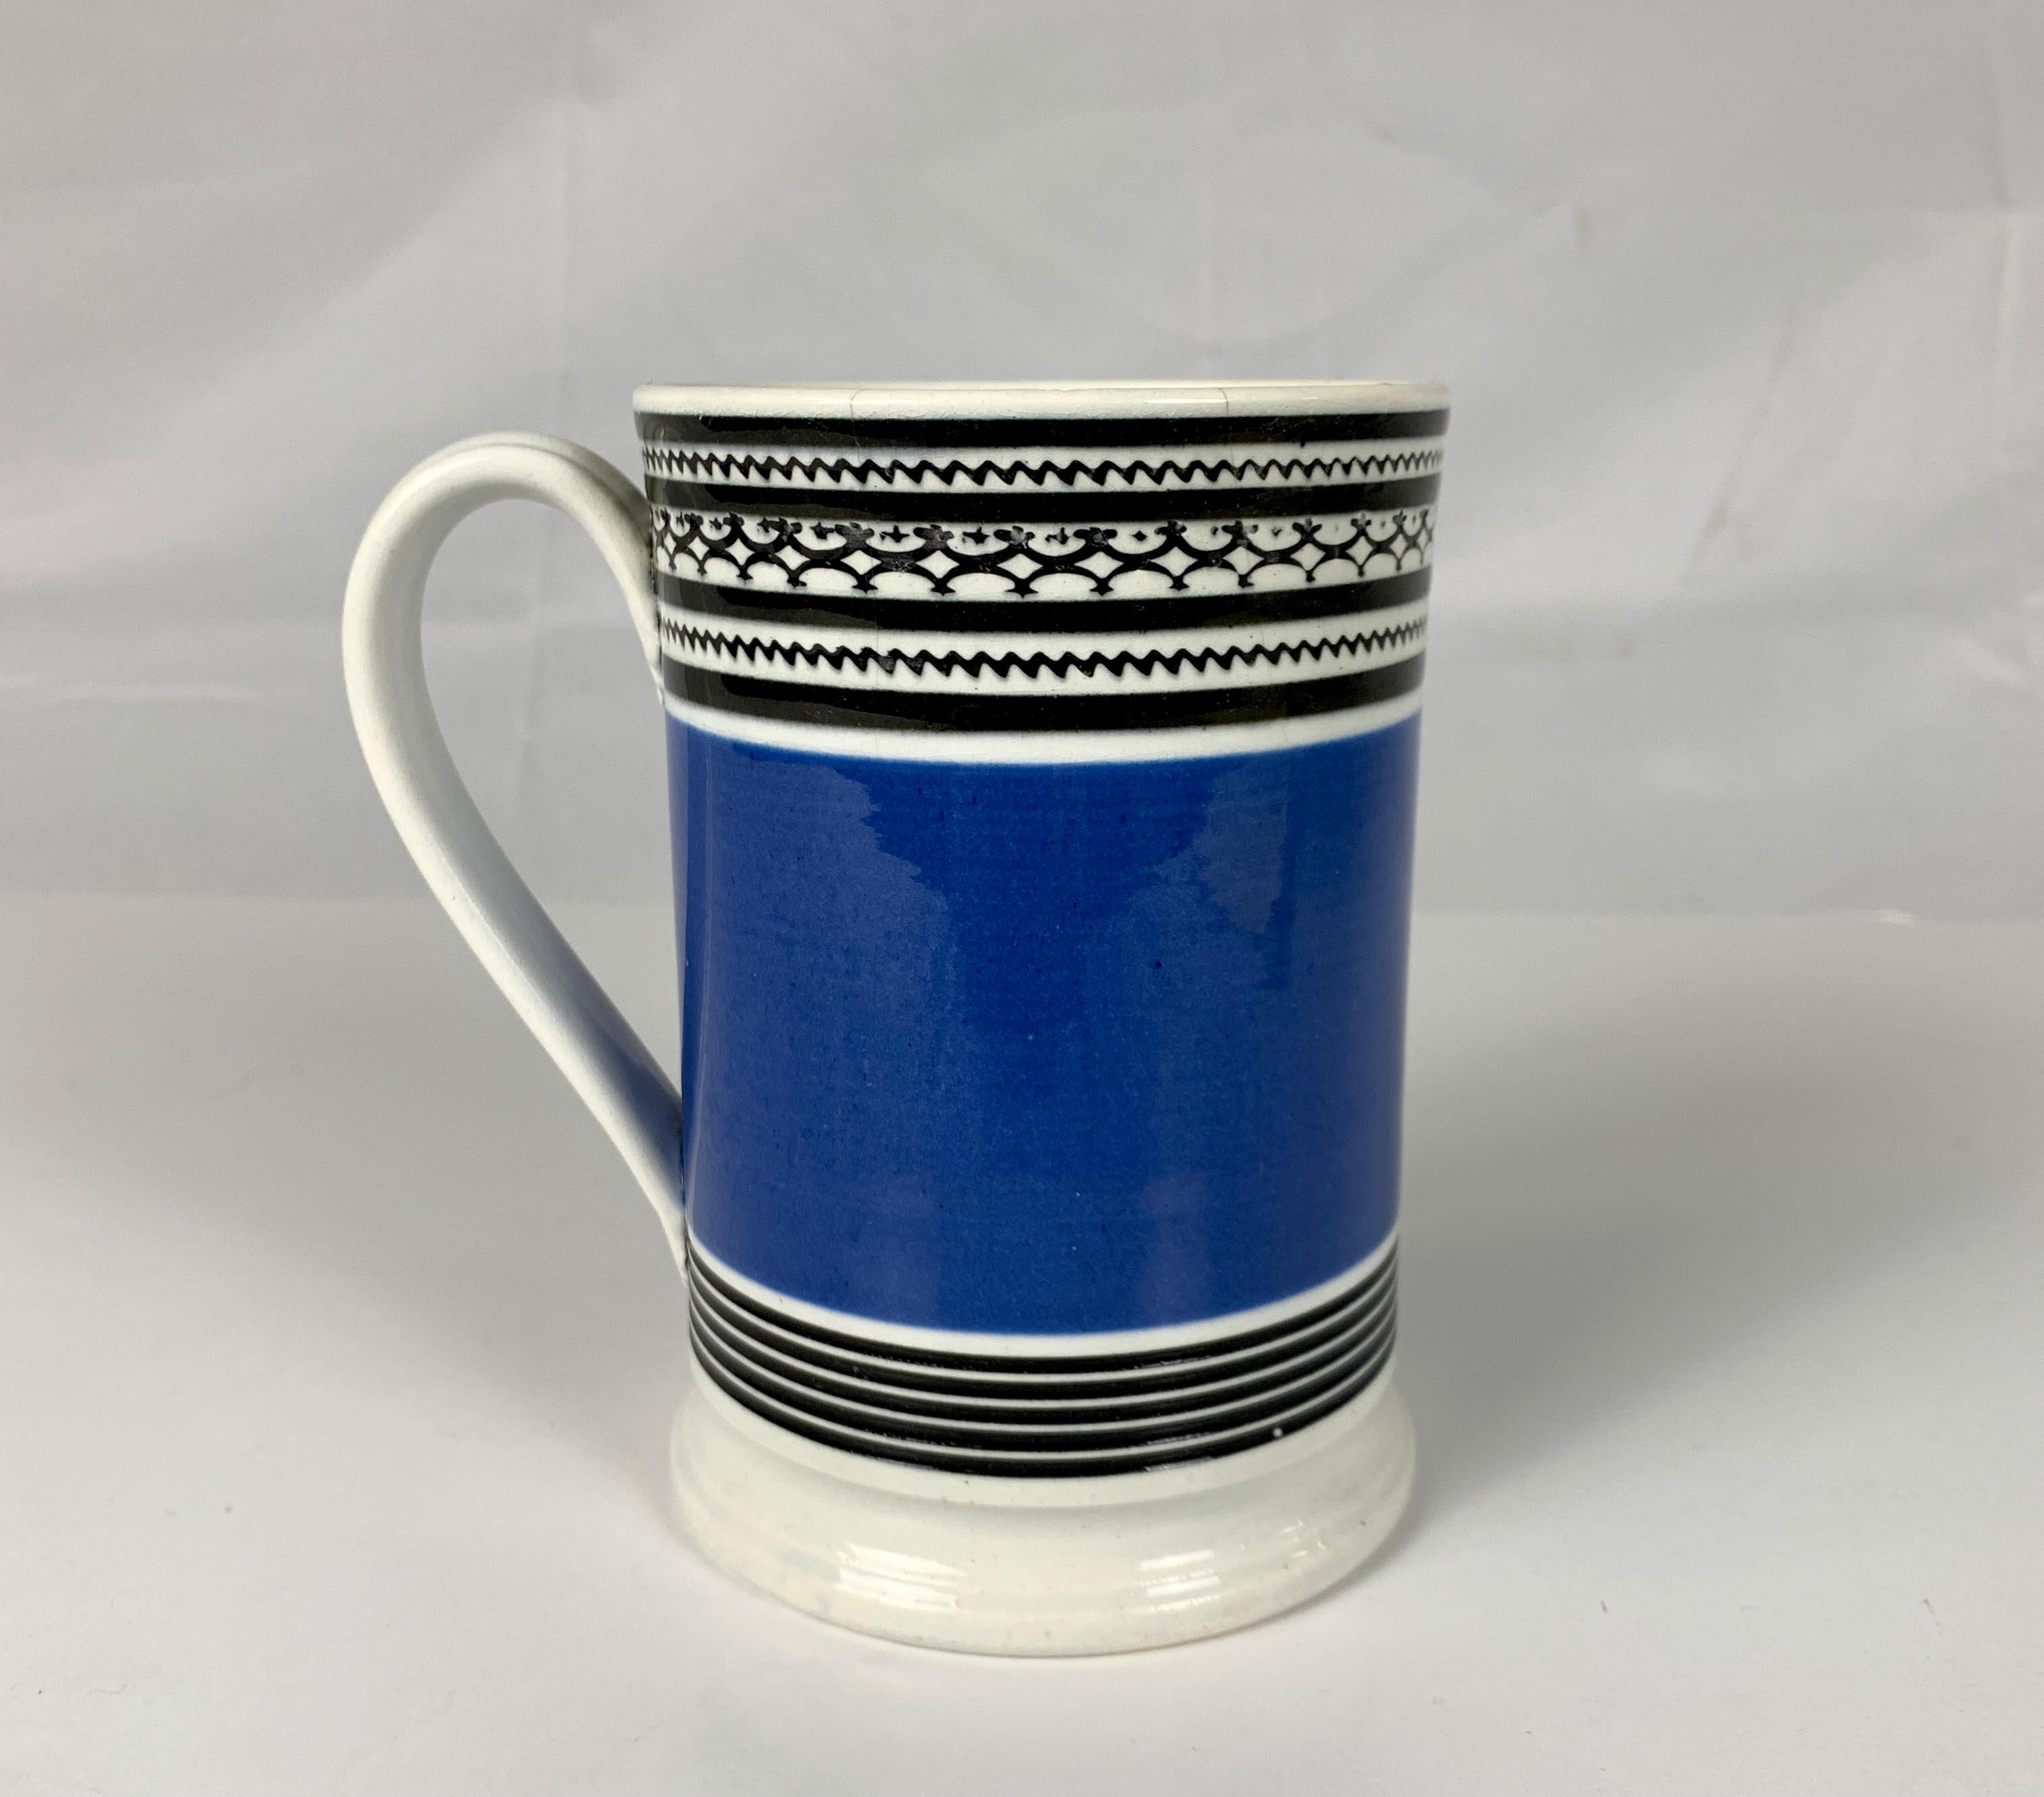 19th Century Mochaware Mug with Royal Blue Slip and Black Geometric Designs Made England